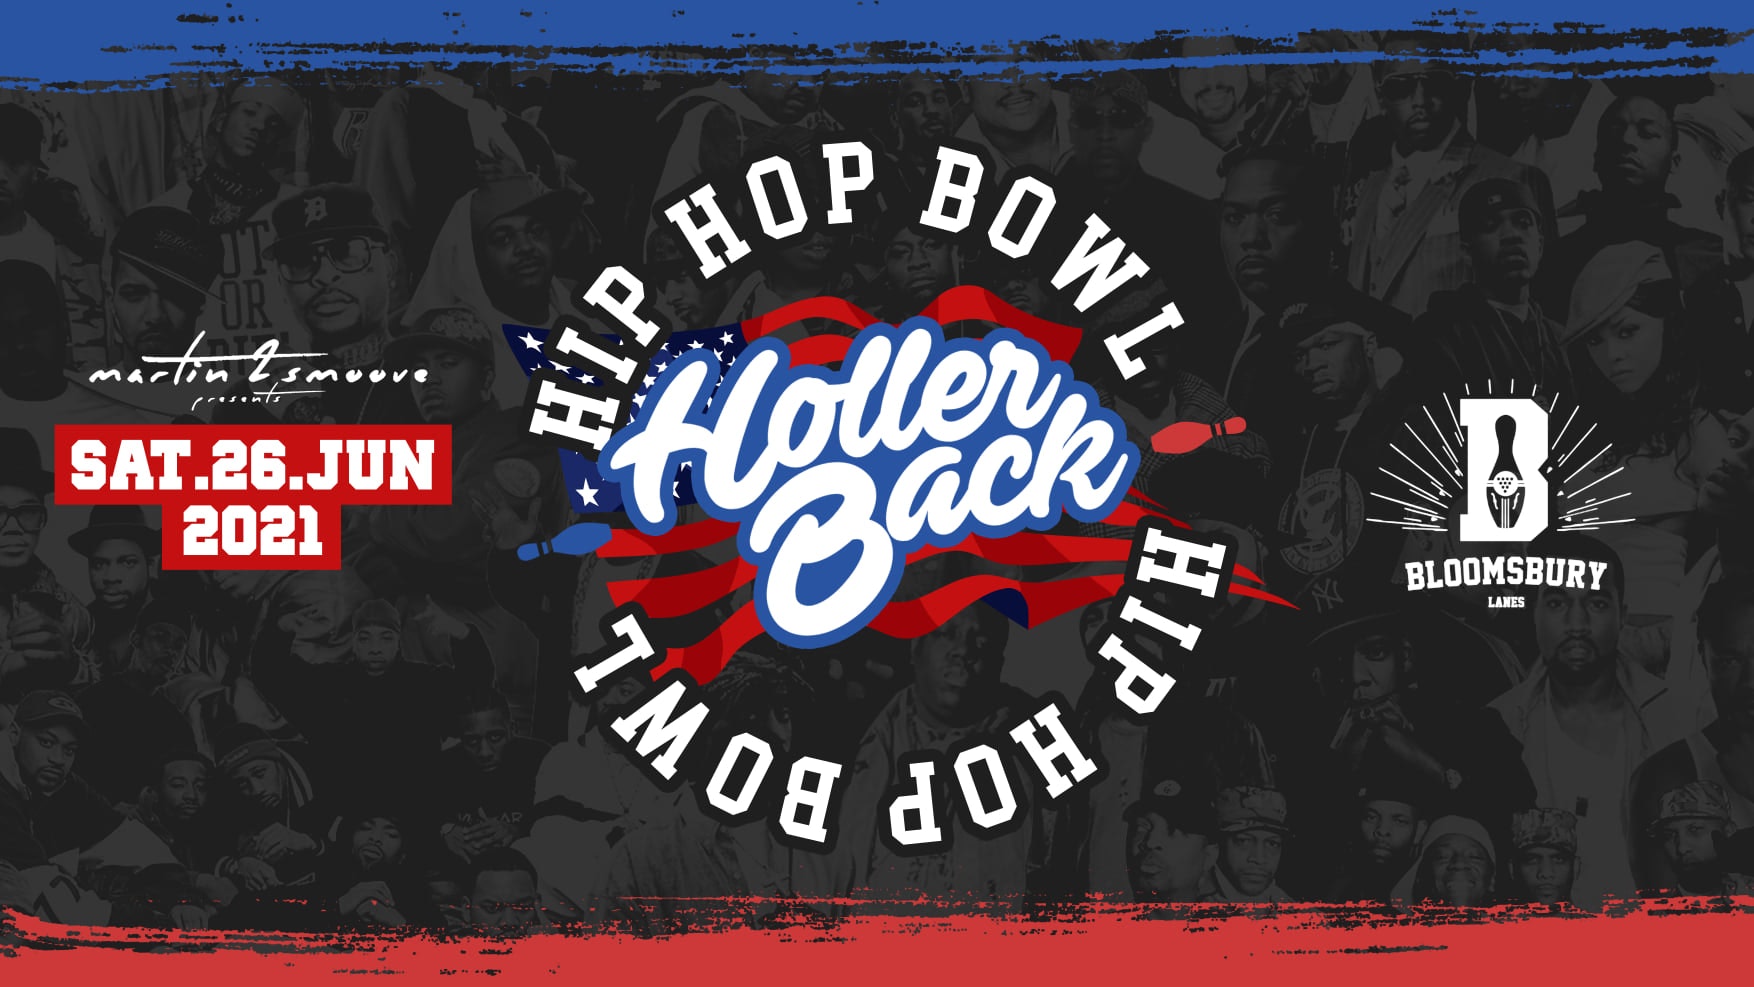 Holler Back Presents: Hip Hop Bowl 🎳 – Bloomsbury Lanes Saturday 26th June